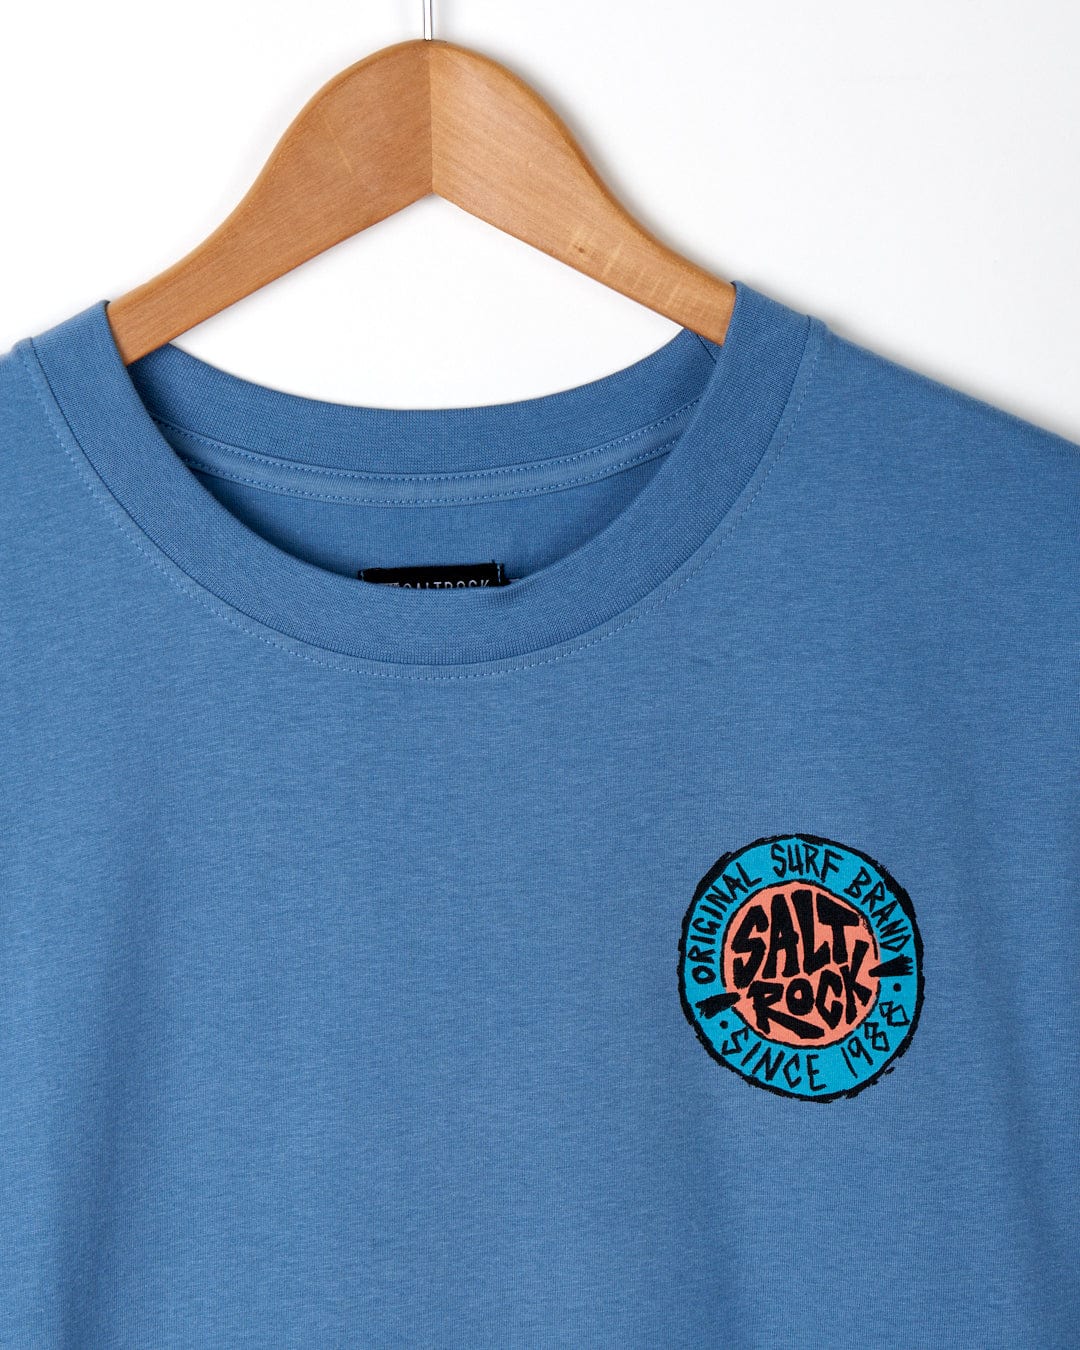 SR Original - Mens Short Sleeve T-Shirt in Blue on a wooden hanger featuring a small circular Saltrock logo on the chest.